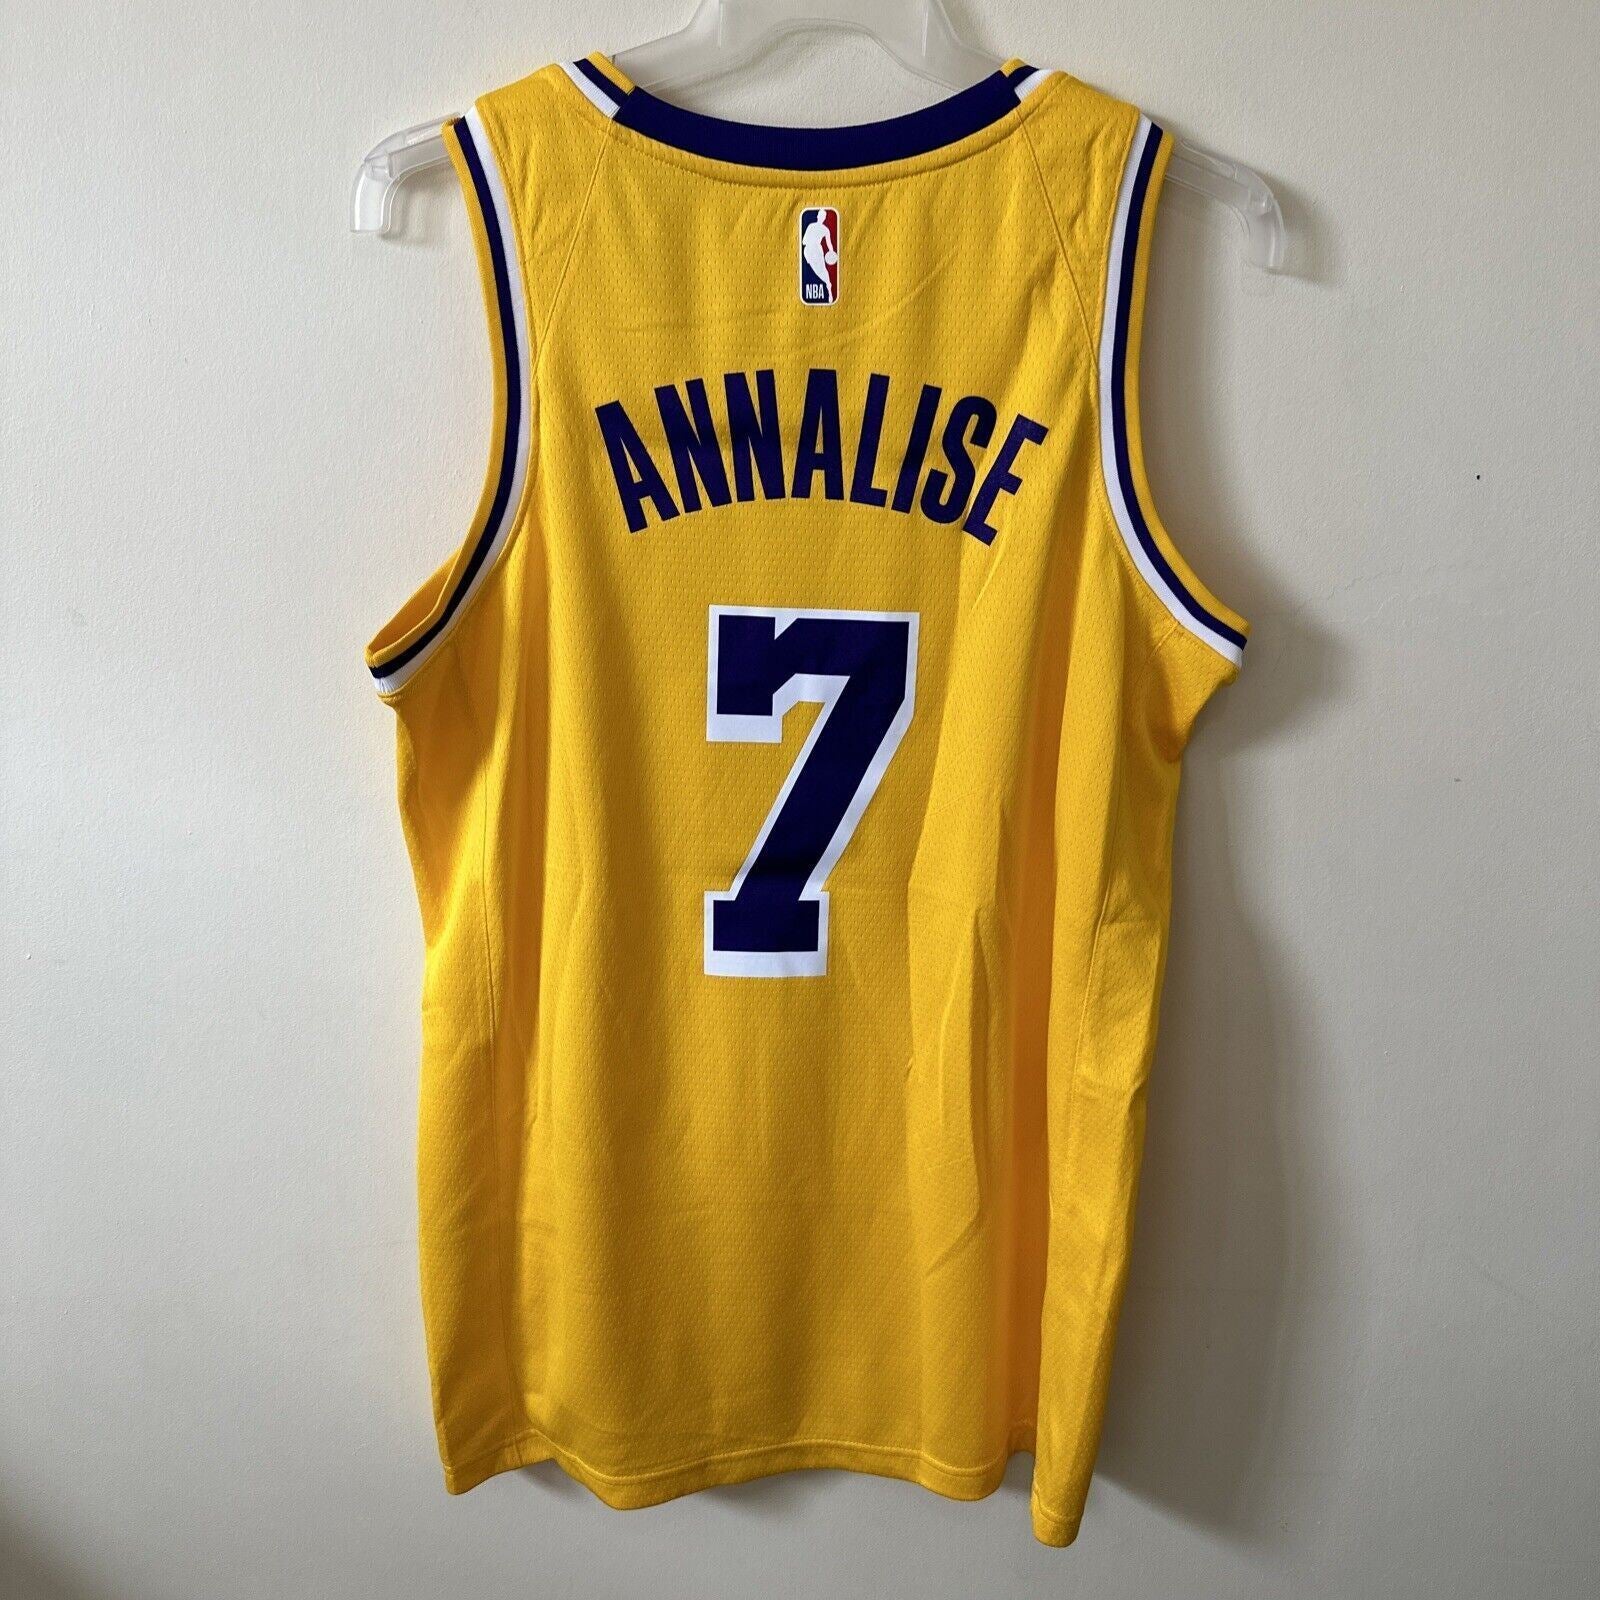 Nike NBA LA Lakers Icon Edition Jersey ANNALISE 7 Basketball Men’s Medium